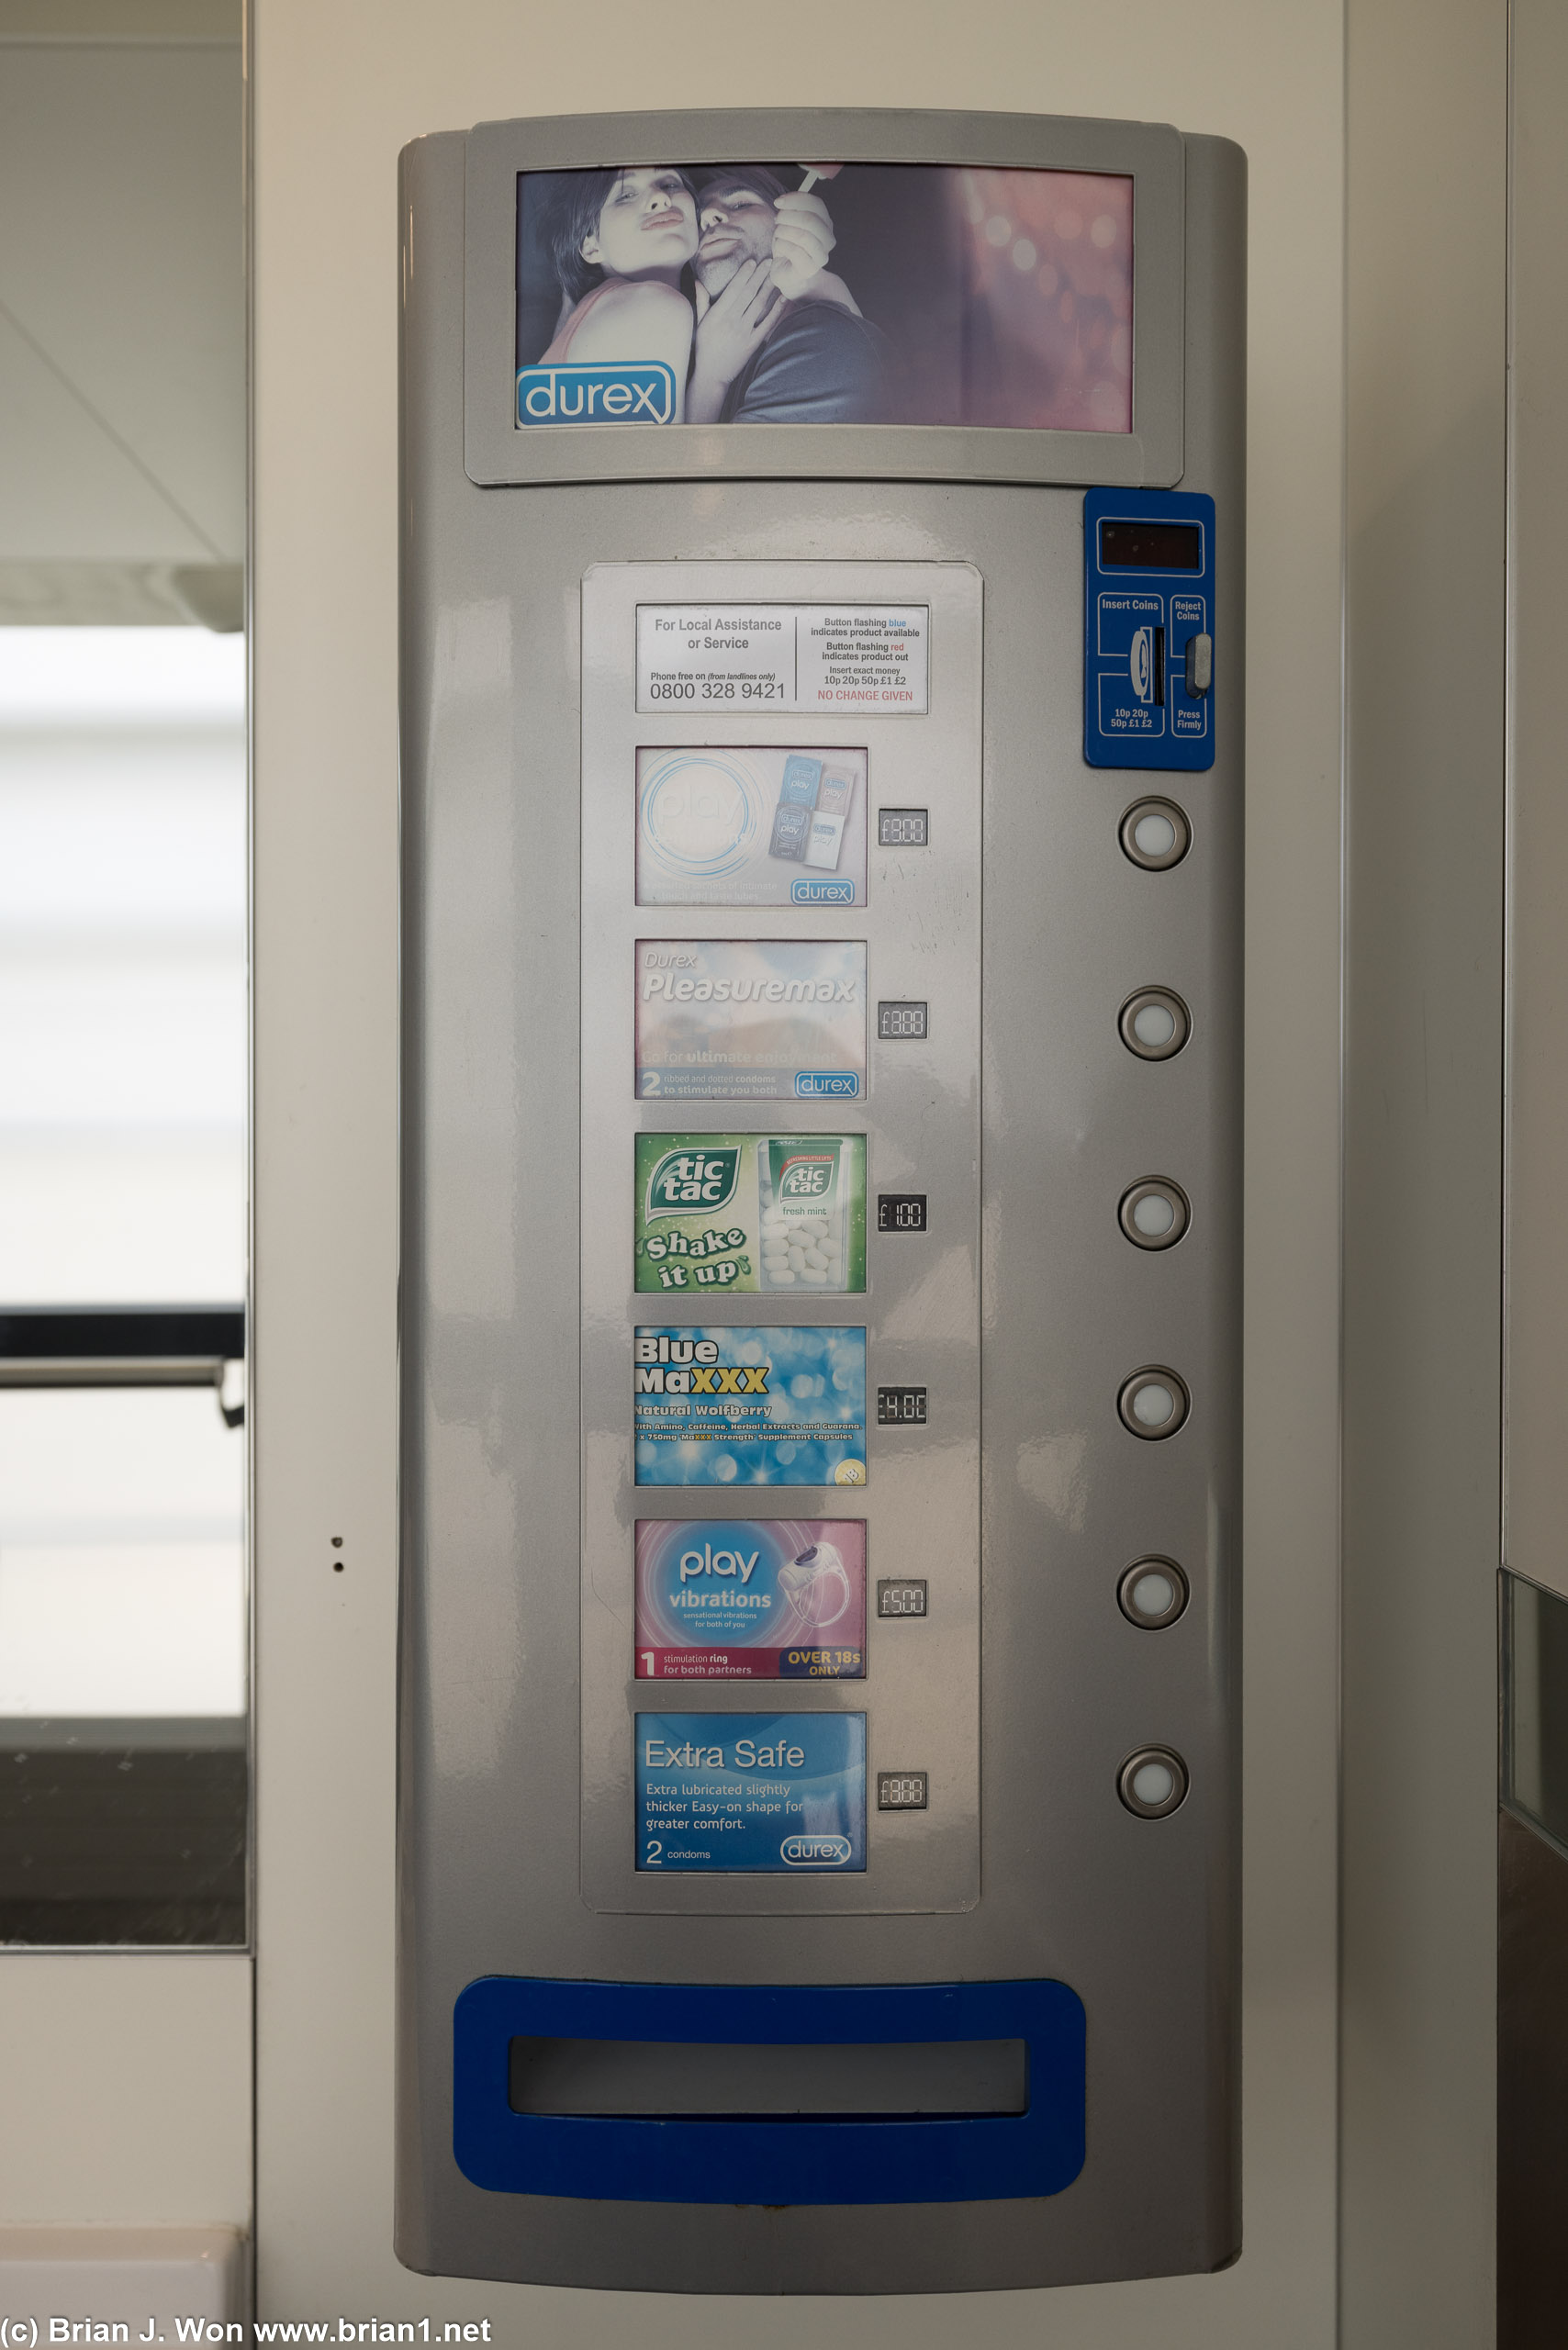 Vending machine in the restroom.